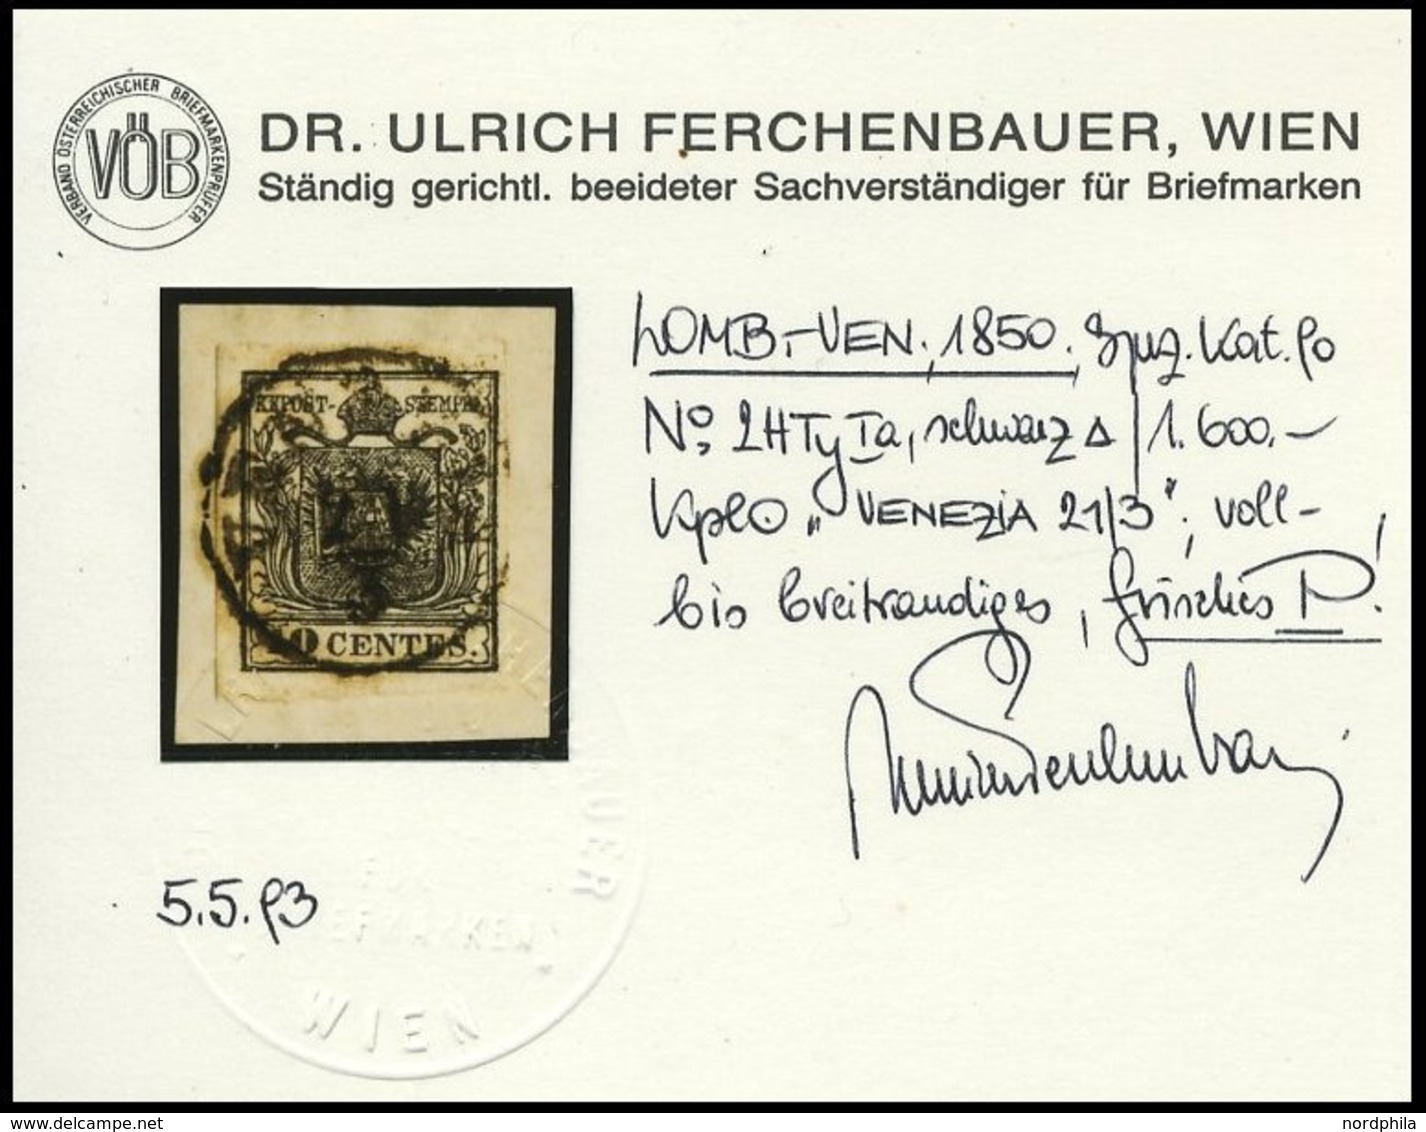 LOMBARDEI UND VENETIEN 2Xa BrfStk, 1850, 10 C. Schwarz, Handpapier, Type Ia, K1 VENEZIA, Prachtbriefstück, Fotobefund Dr - Lombardo-Vénétie